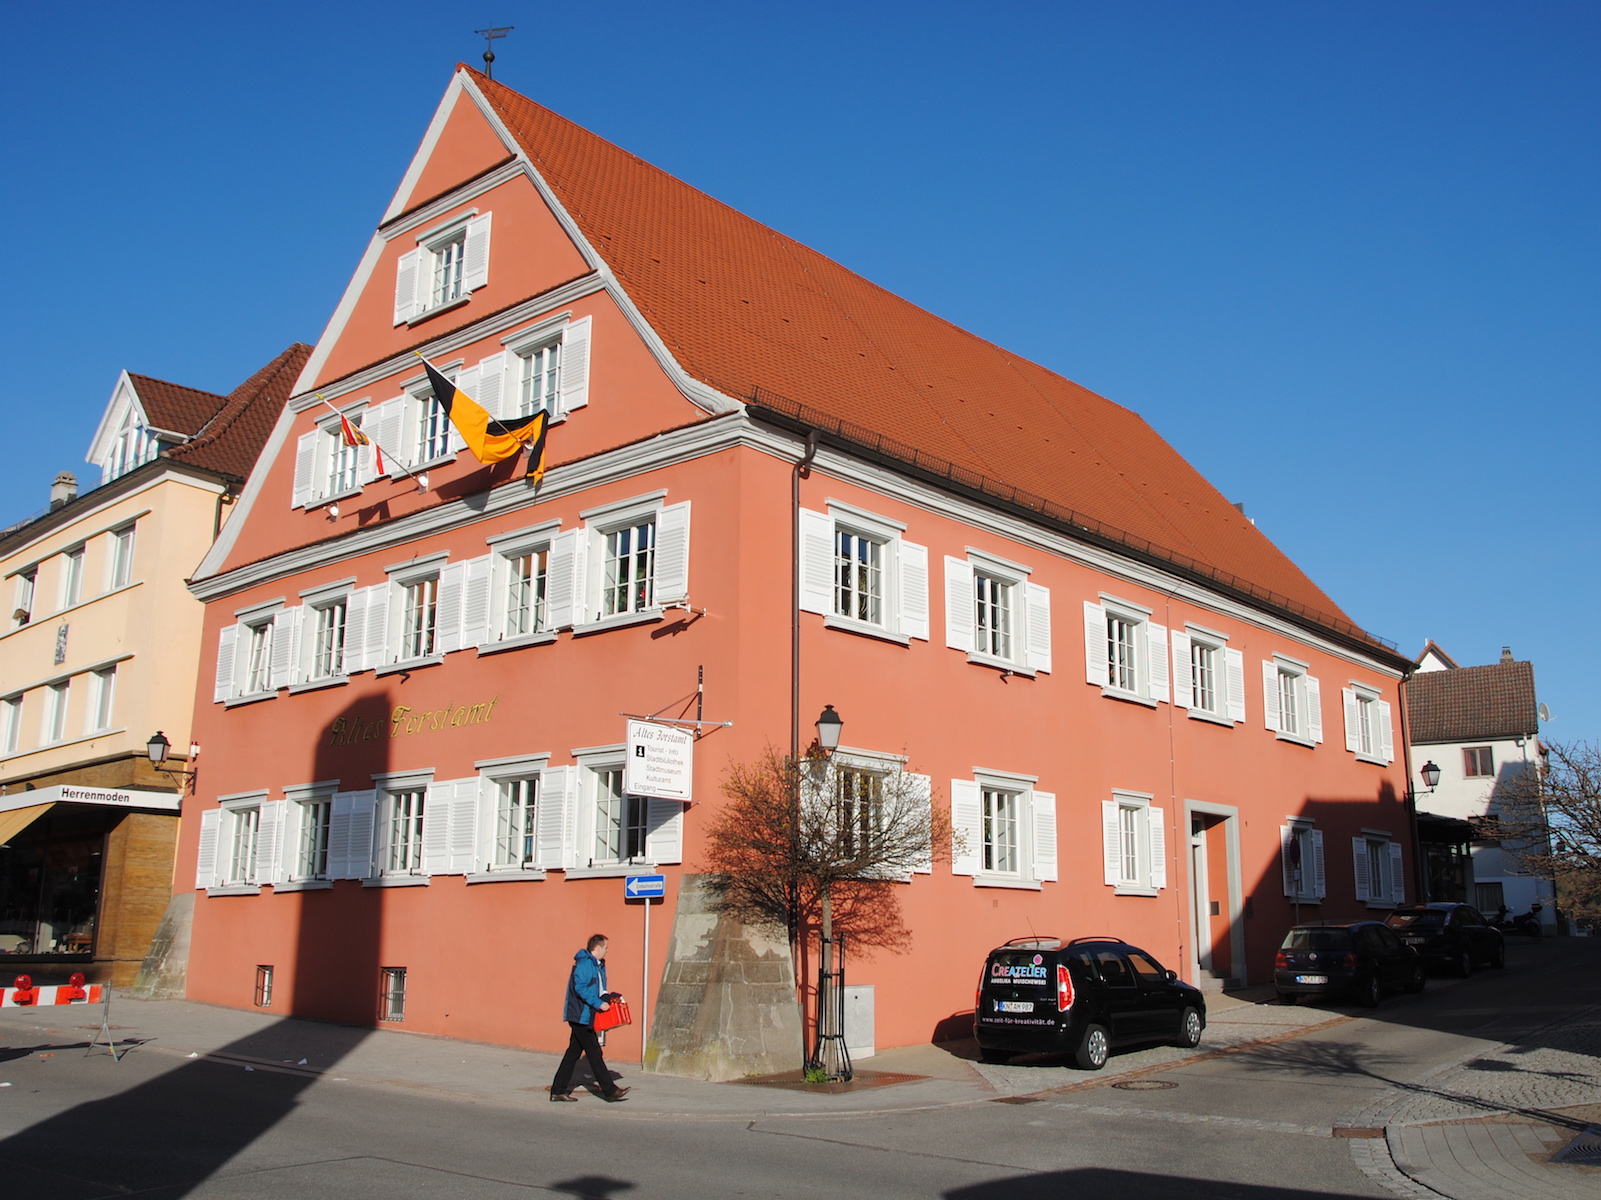  El centro cultural "Altes Forstamt" 